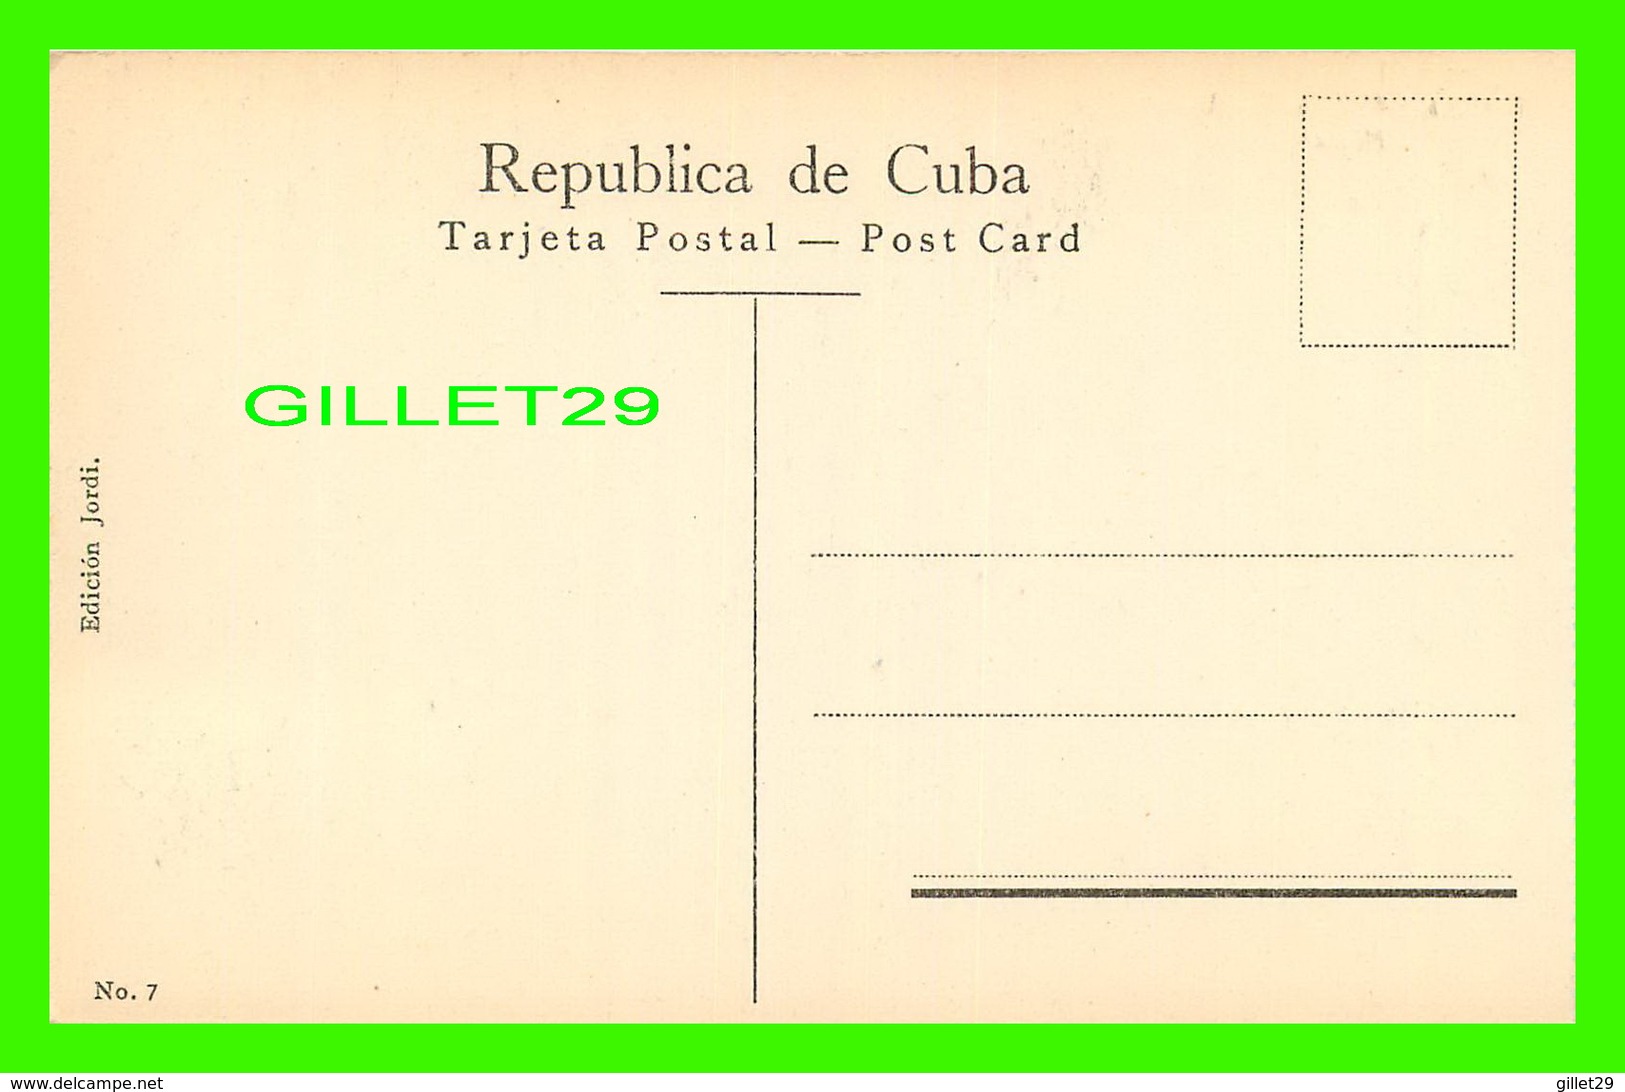 HABANA, CUBA - MTO A MARTI, TEATRO NACIONAL, CENTRO GALLEGO - EDICION JORDI - - Cuba